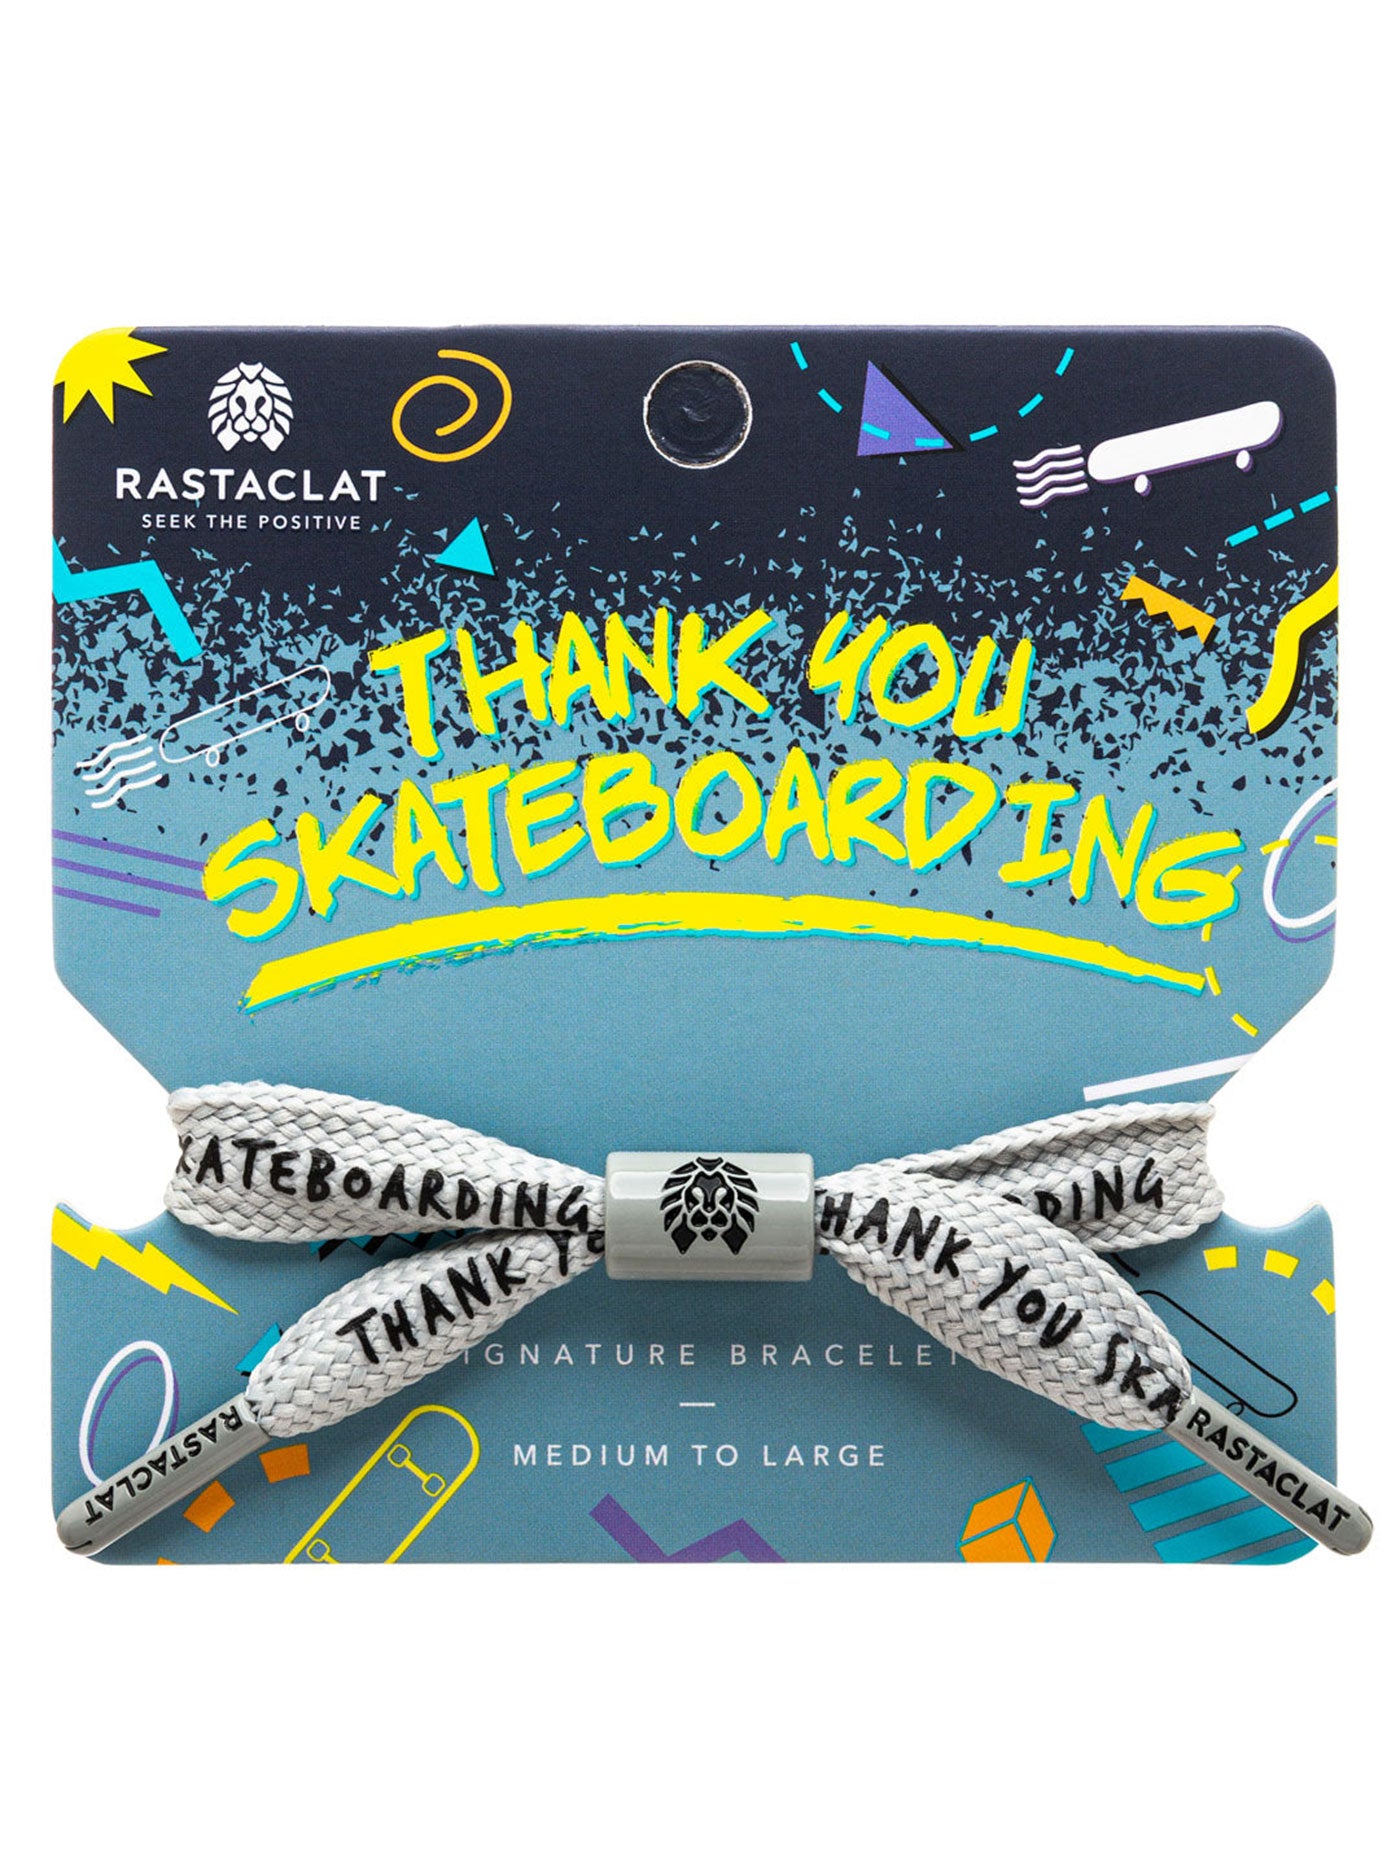 Rastaclat Thank You Skateboarding Single Lace Bracelet